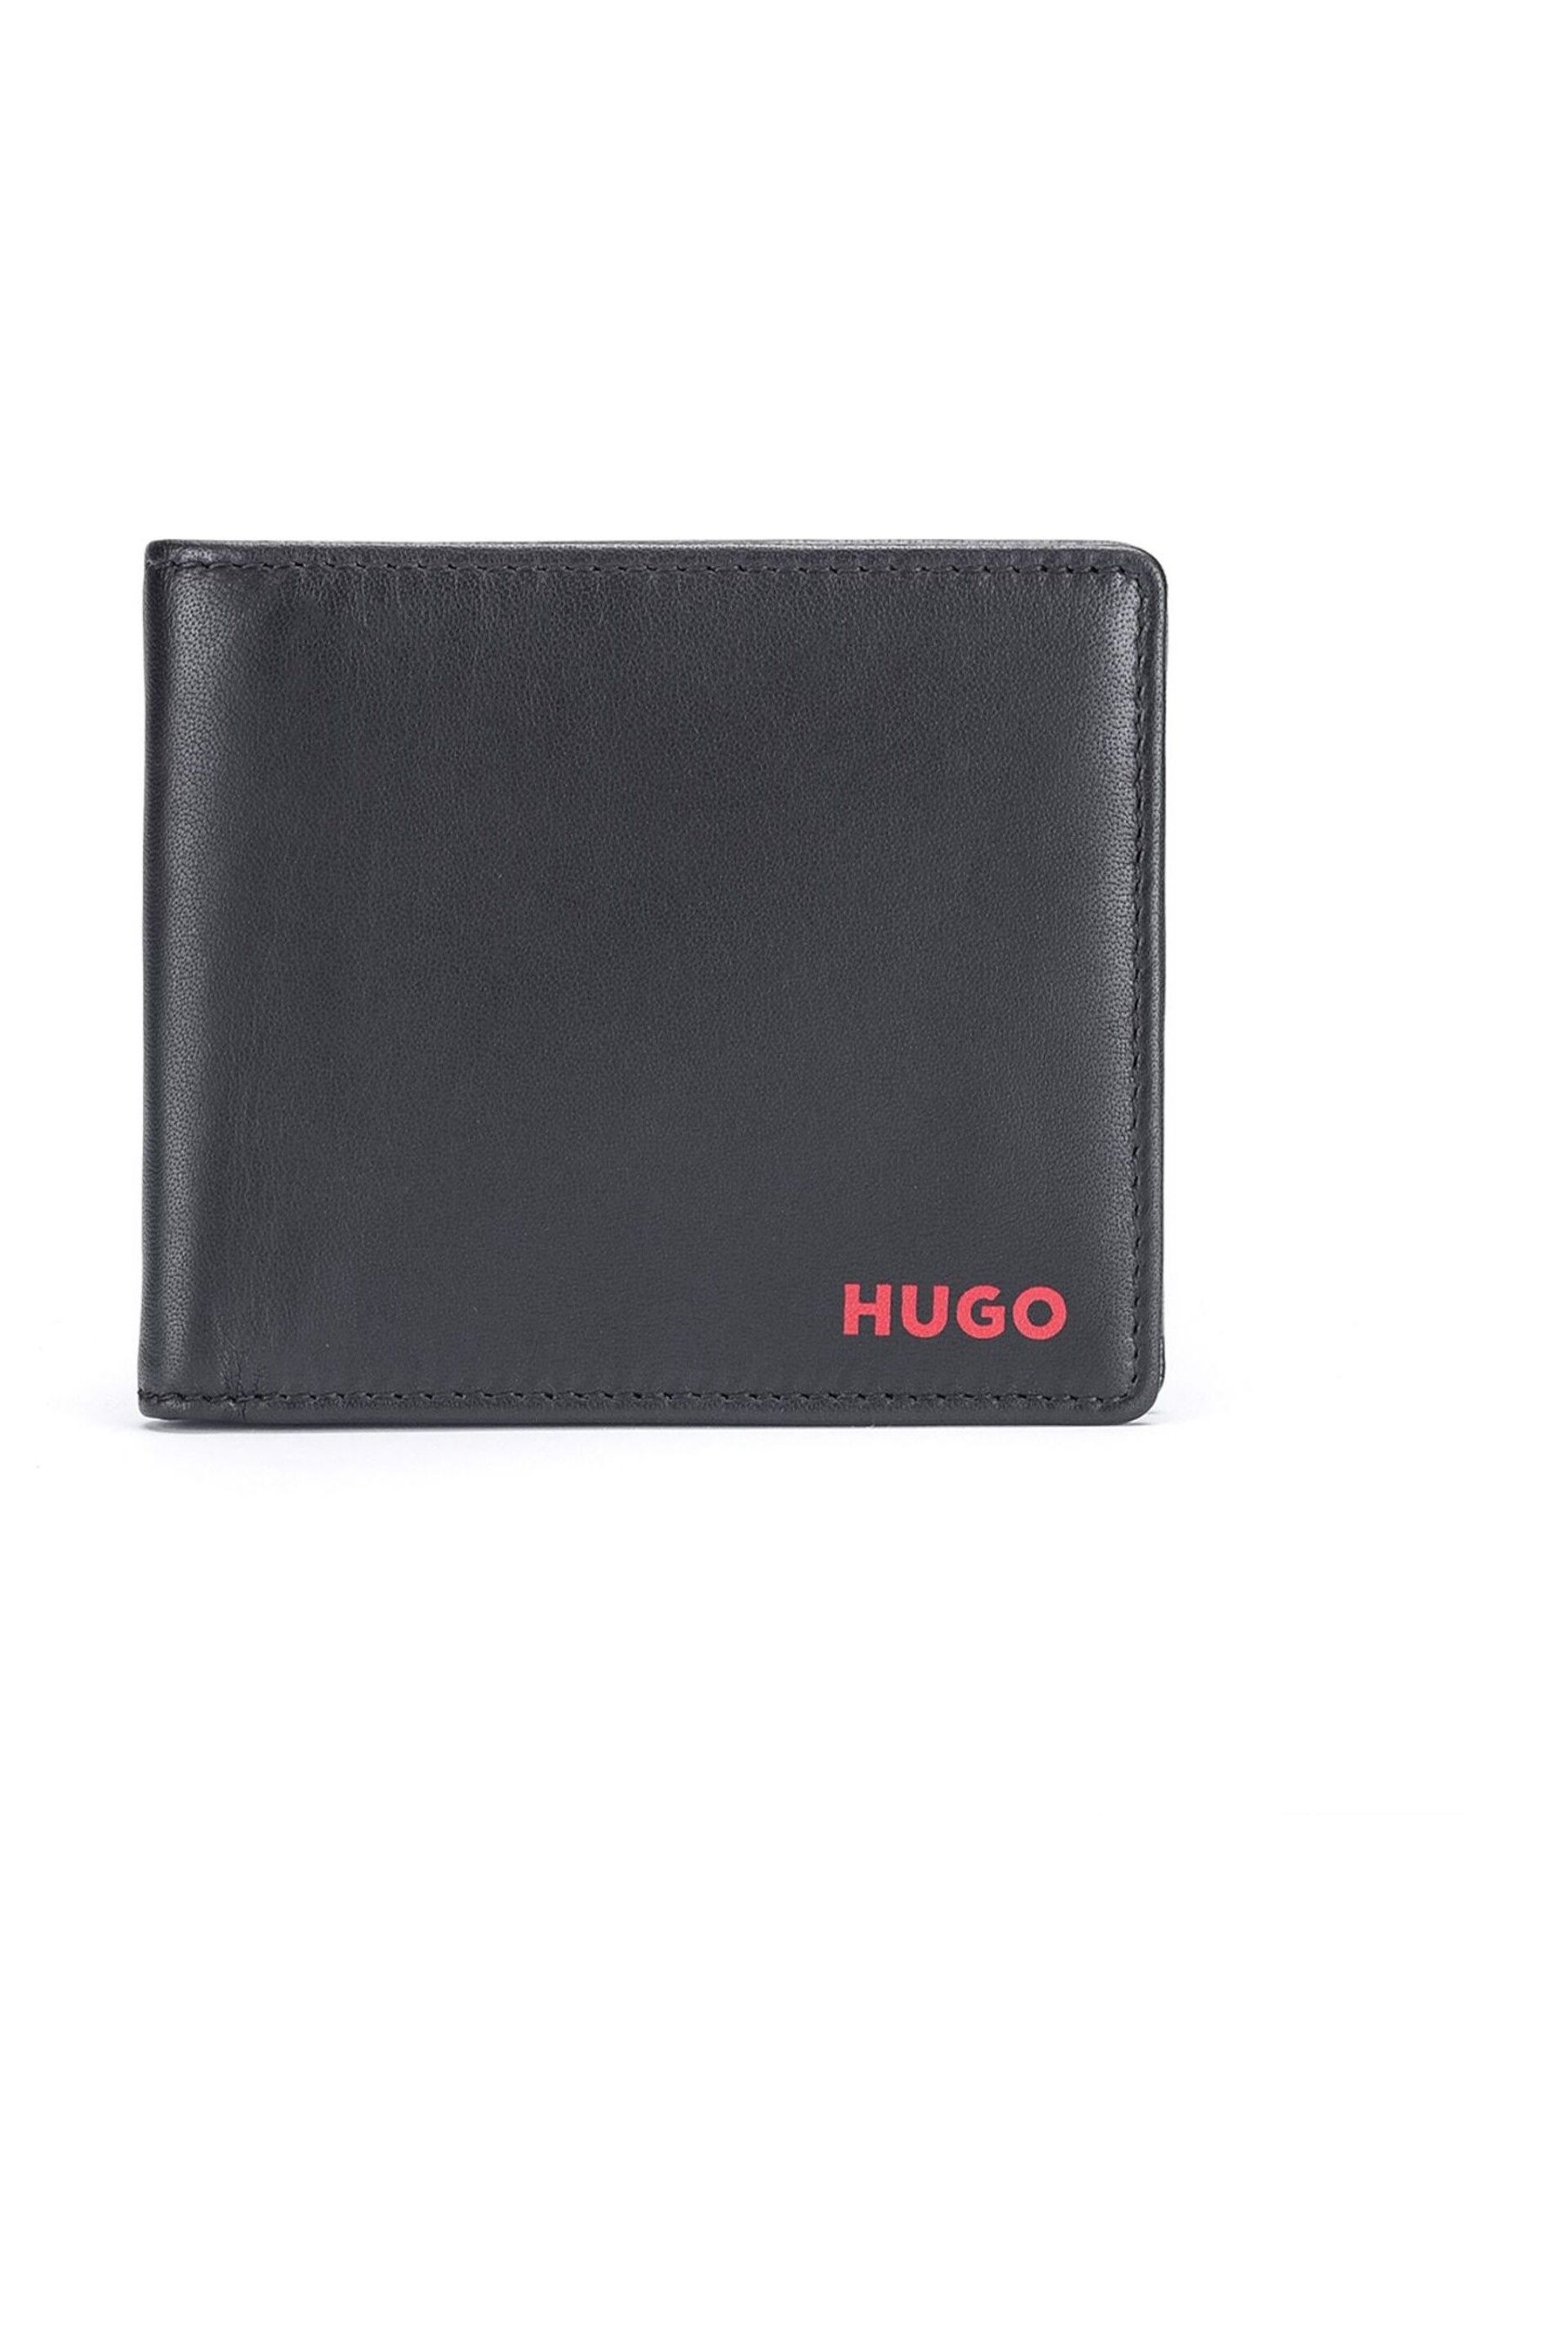 HUGO Black Subway Wallet - Image 1 of 4